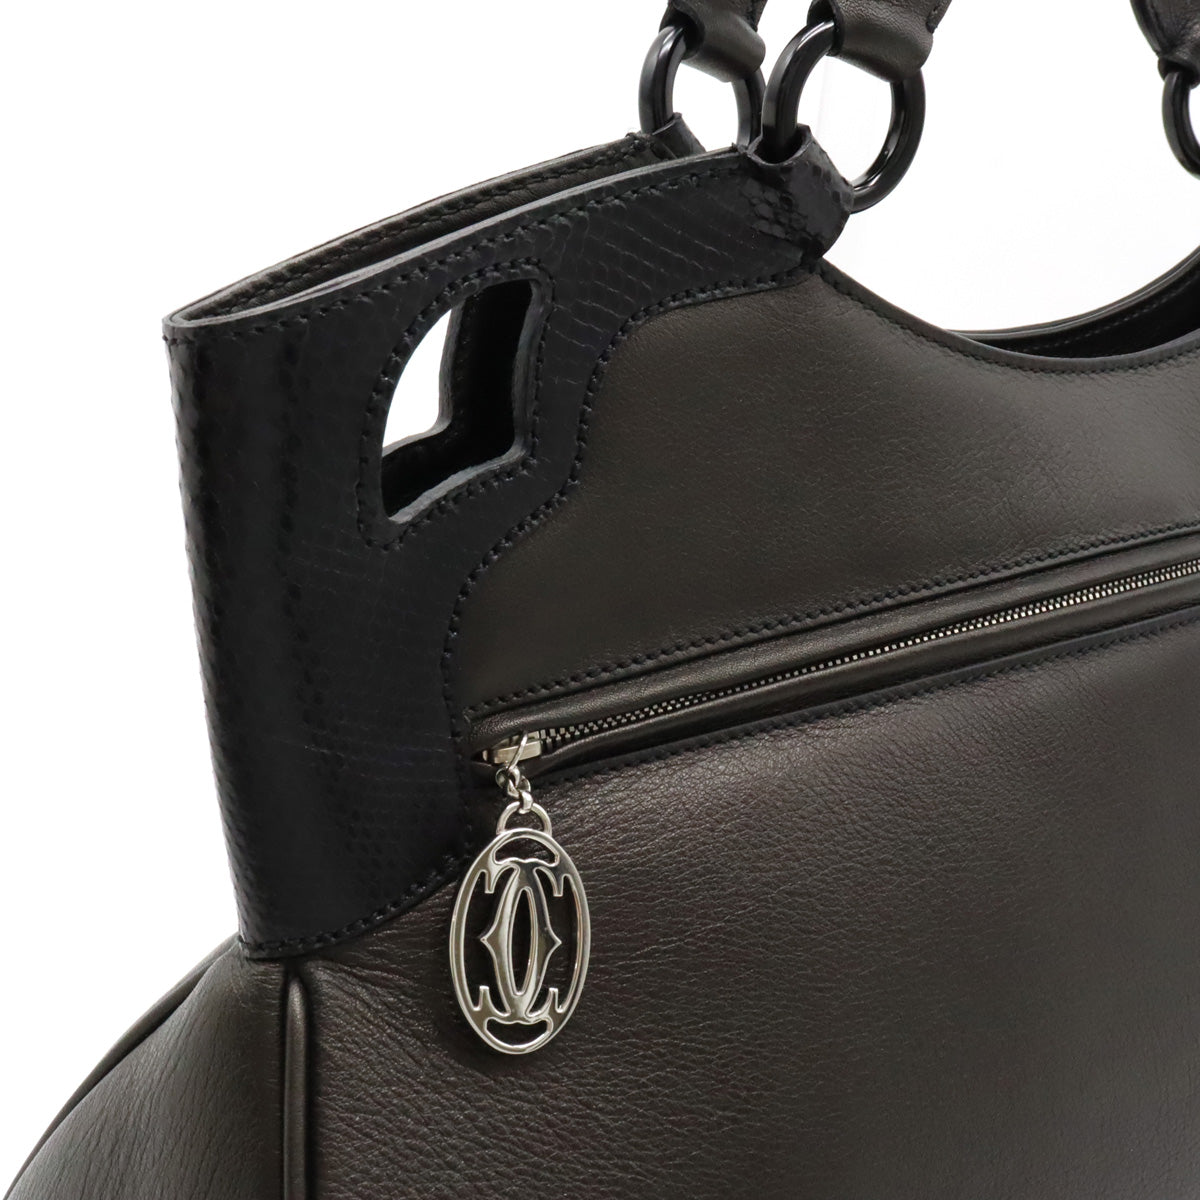 Cartier Cartier du Cartier Martello MM Handbag Handbag Leather Bag Black L1000828